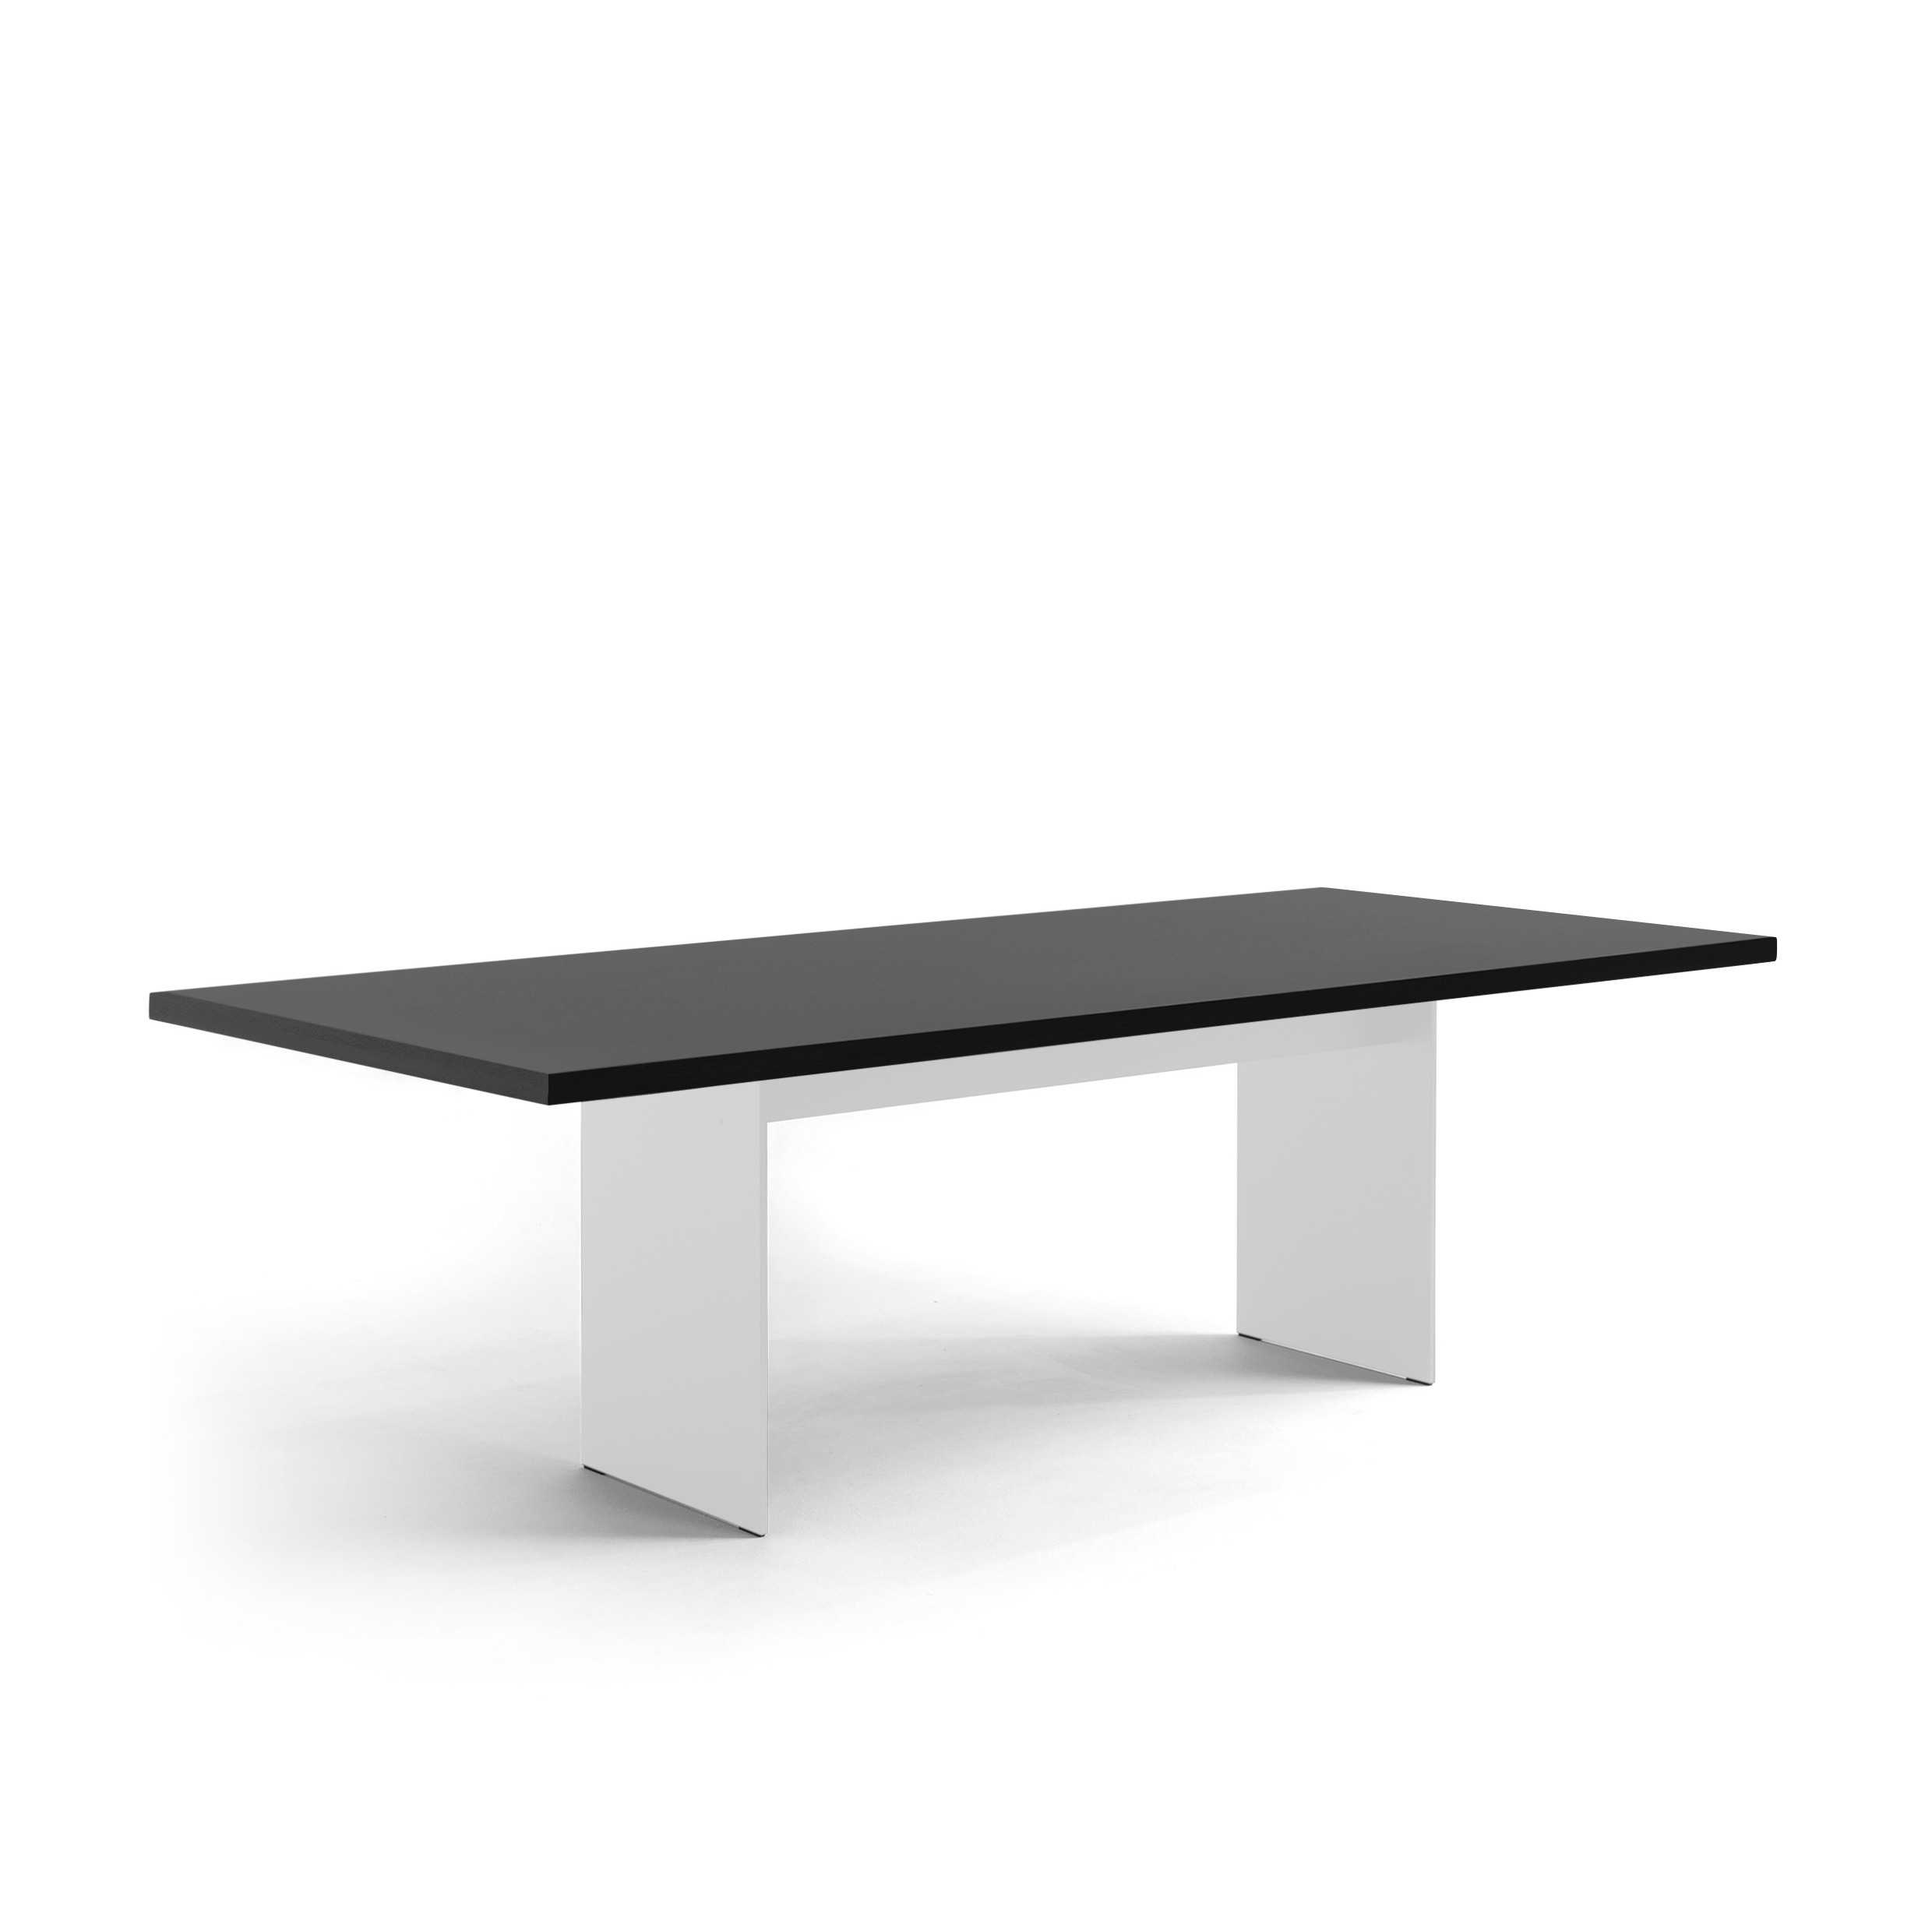 FORM EXCLUSIVE // KUNO - TABLE | FENIX | BLACK - BLACK - SLEEK WHITE - 240CM X 100CM X 4CM